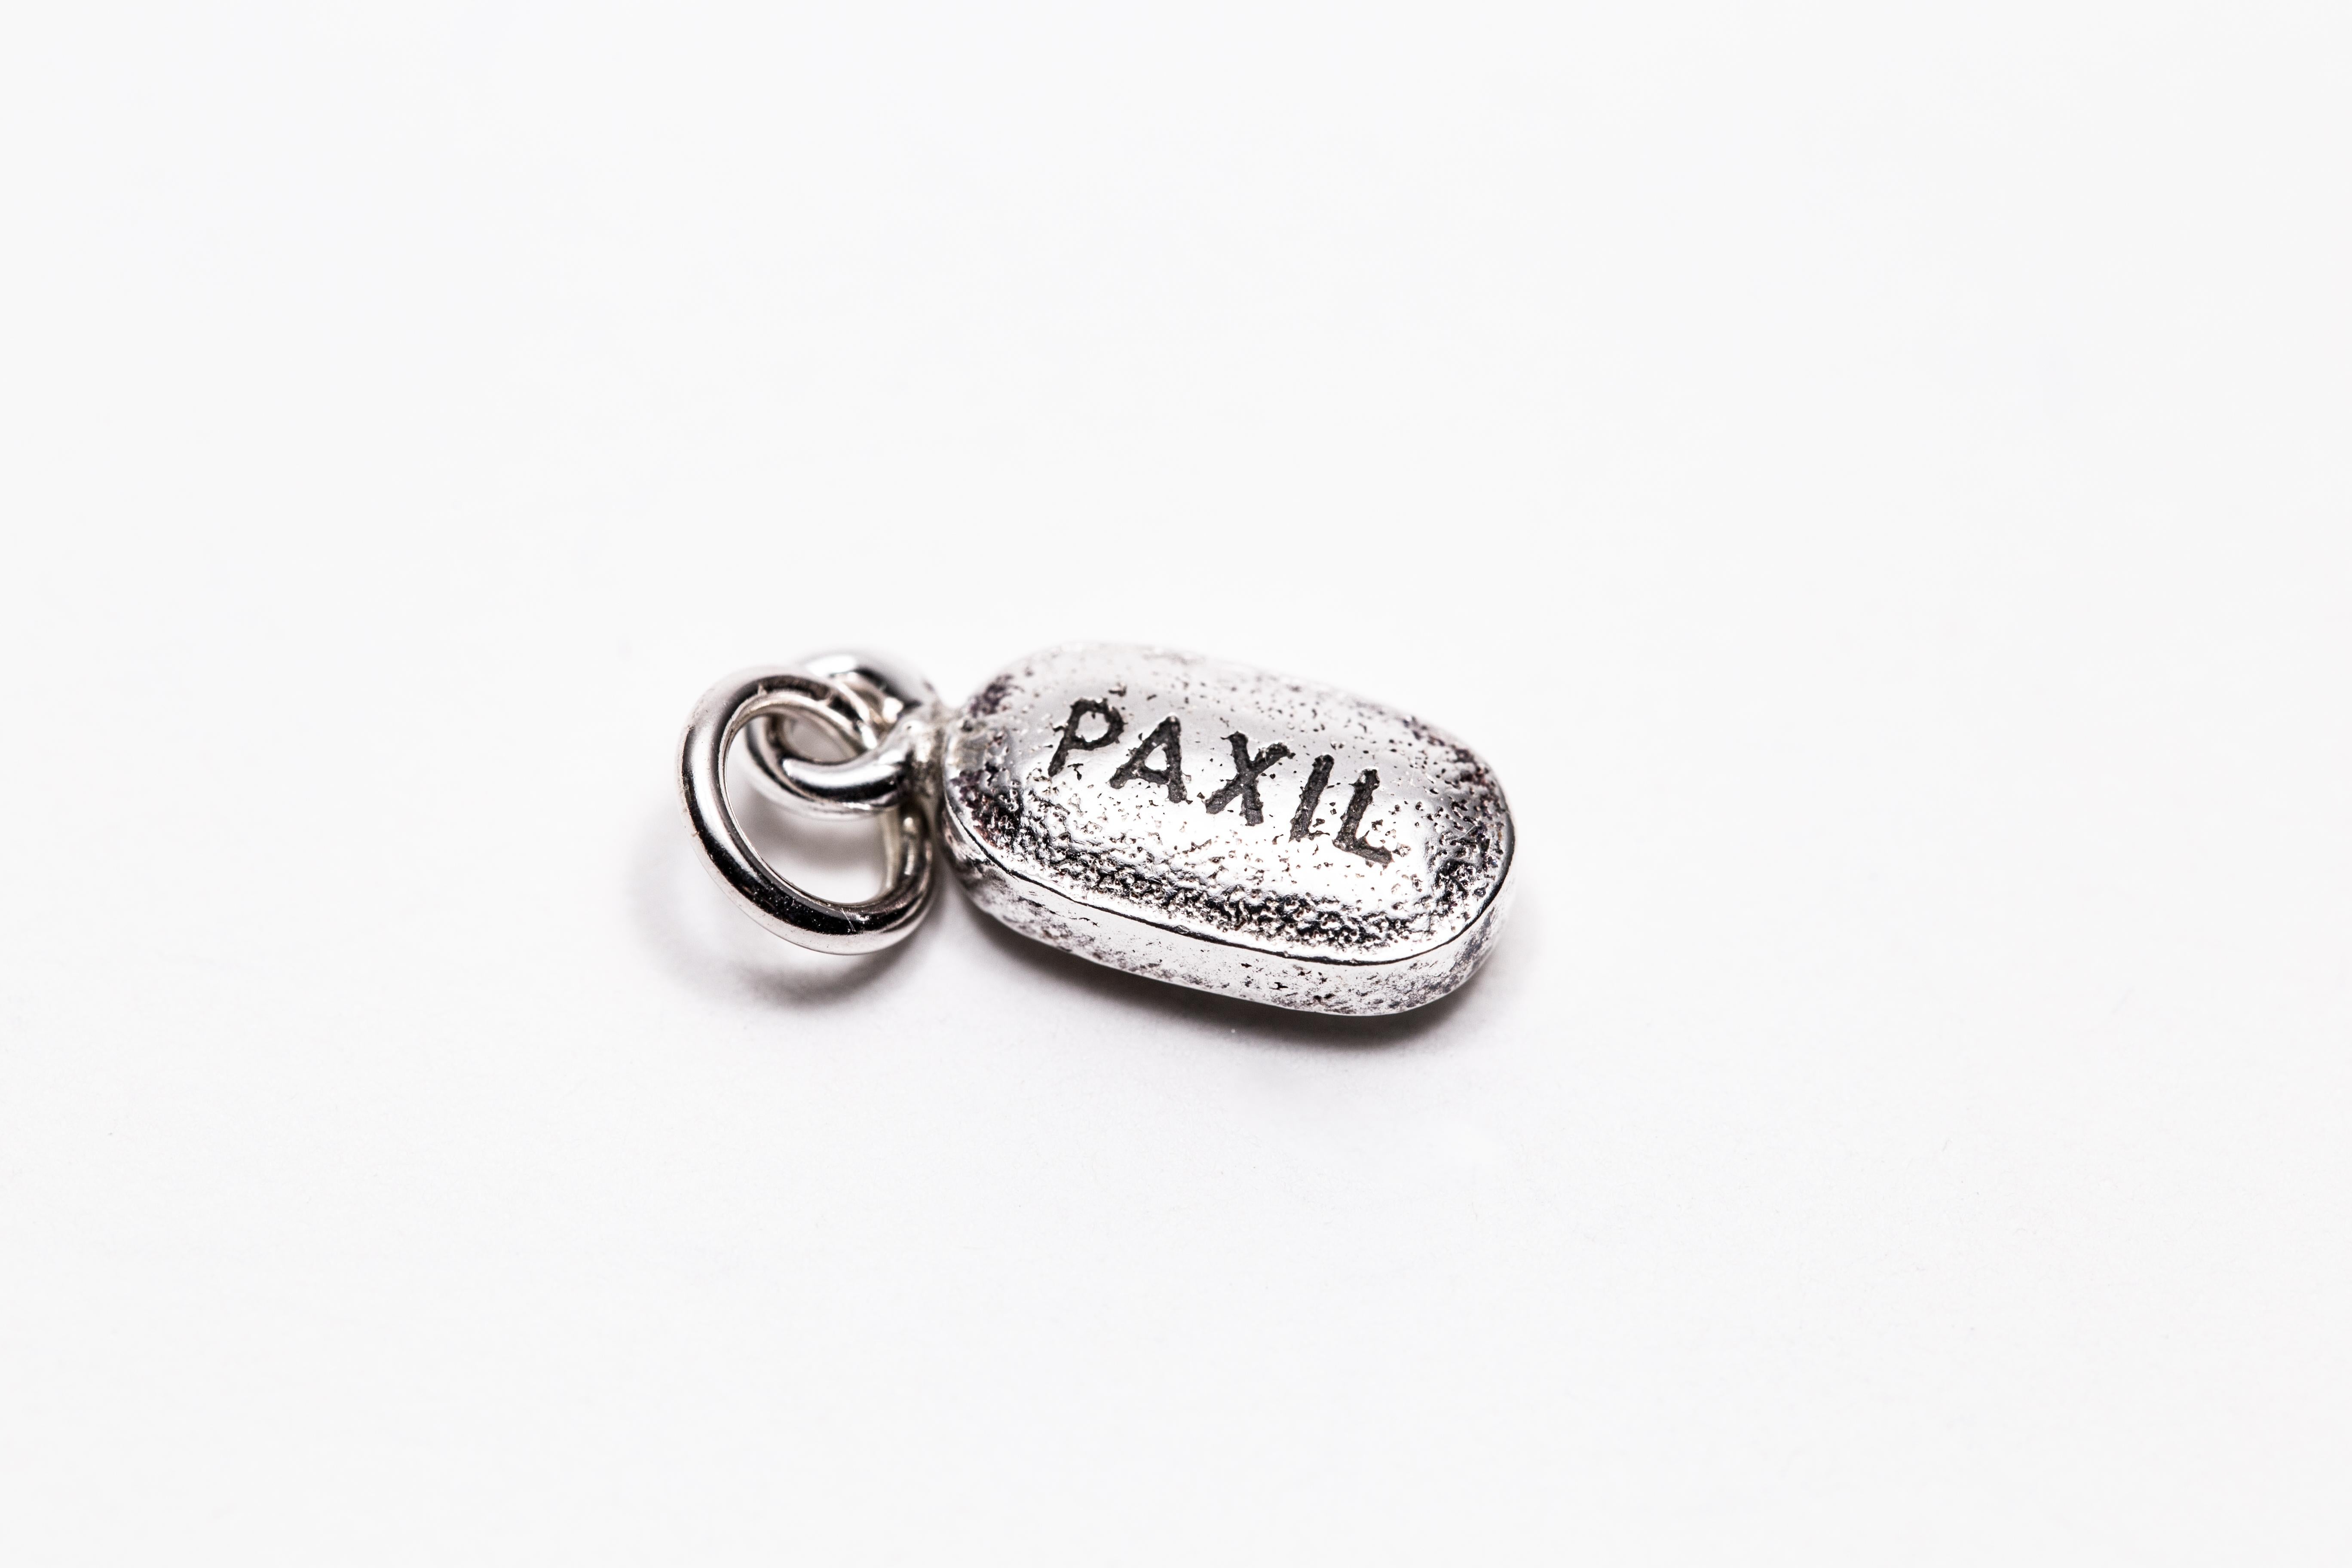 Untitled pendant (Paxil - paroxetine)